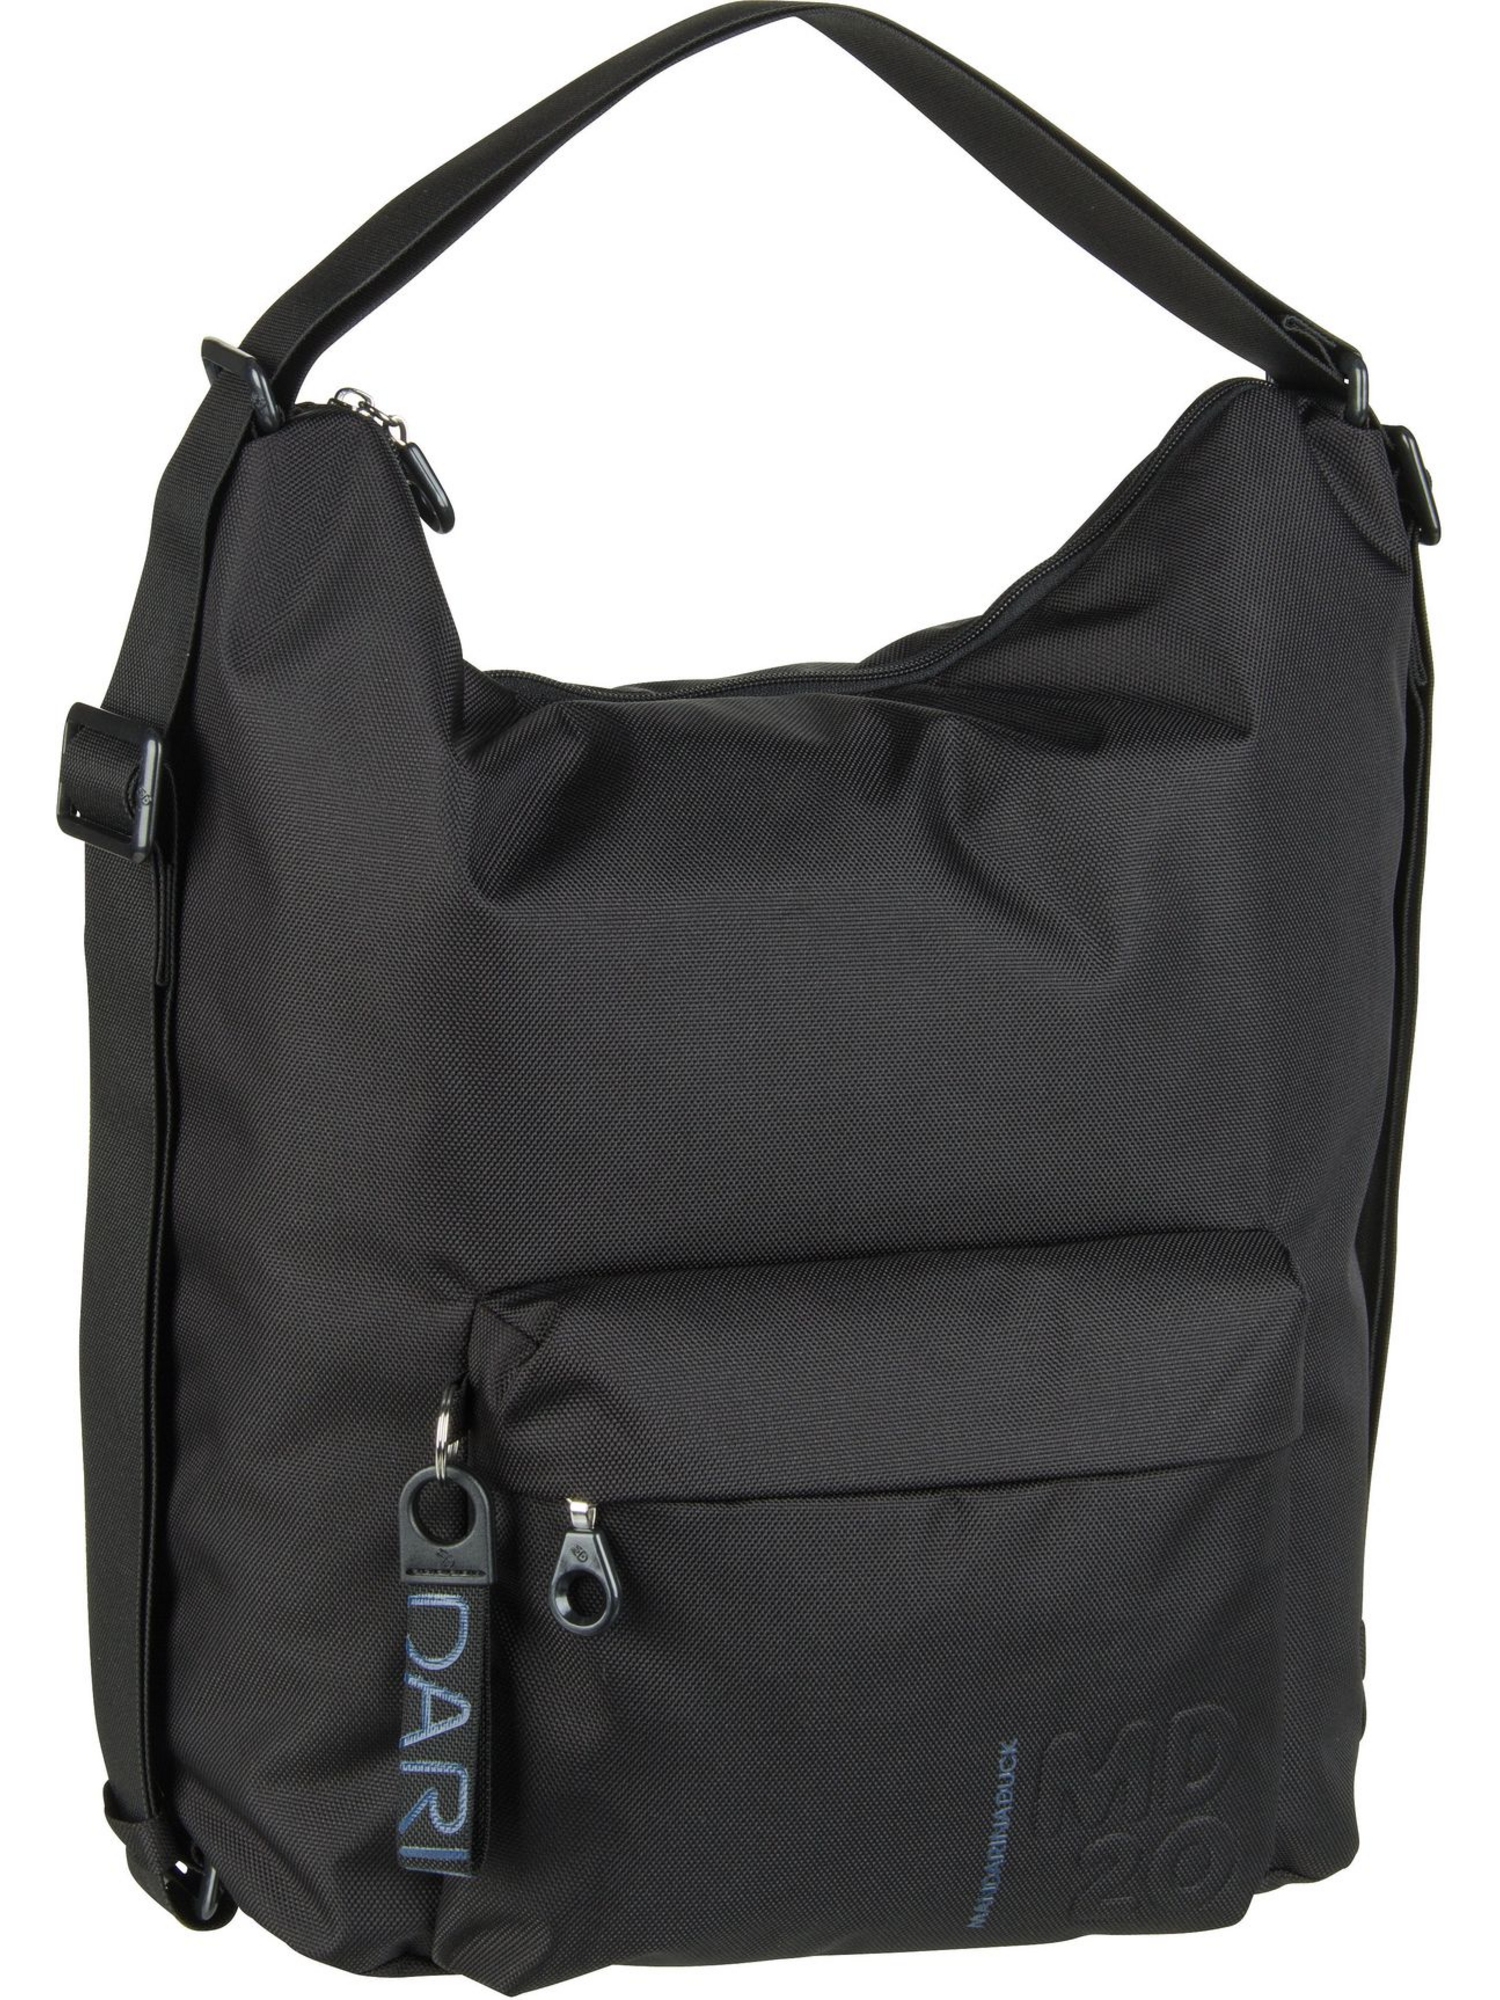 Сумка Mandarina Duck Rucksack/Backpack MD20 Hobo Backpack QMT09, черный